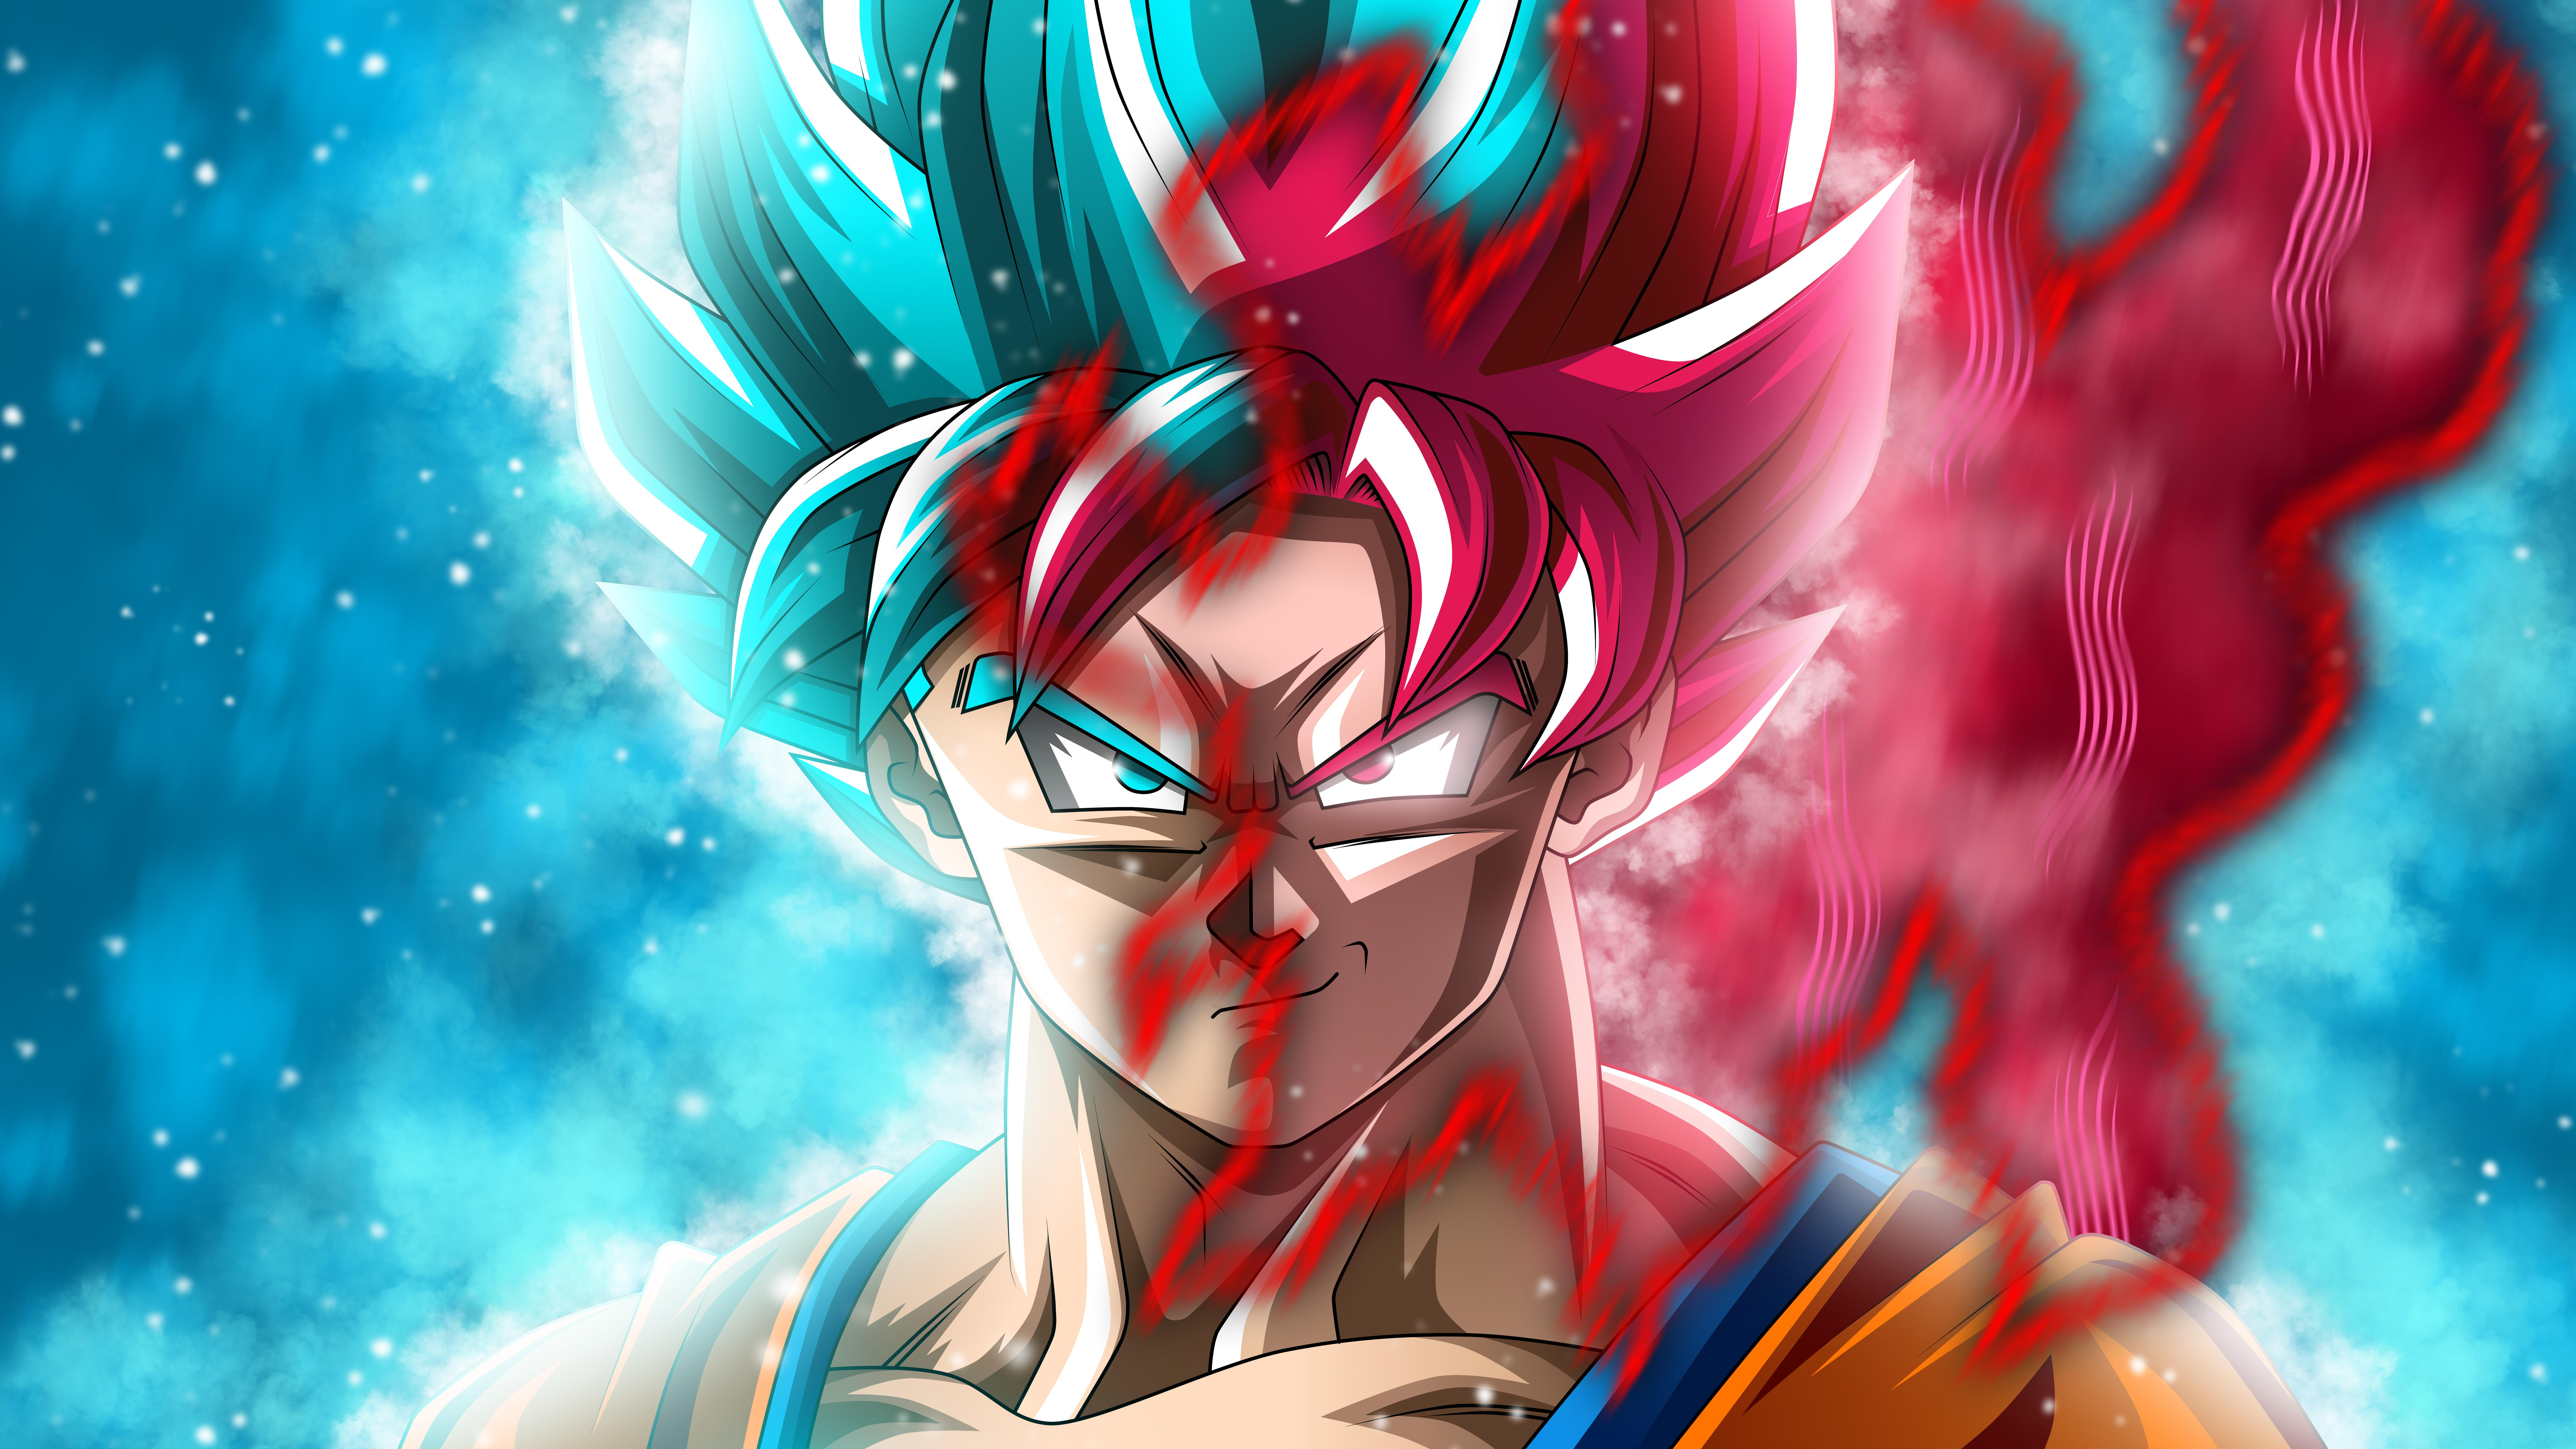 Goku | Anime Characters Info Wiki | Fandom-demhanvico.com.vn